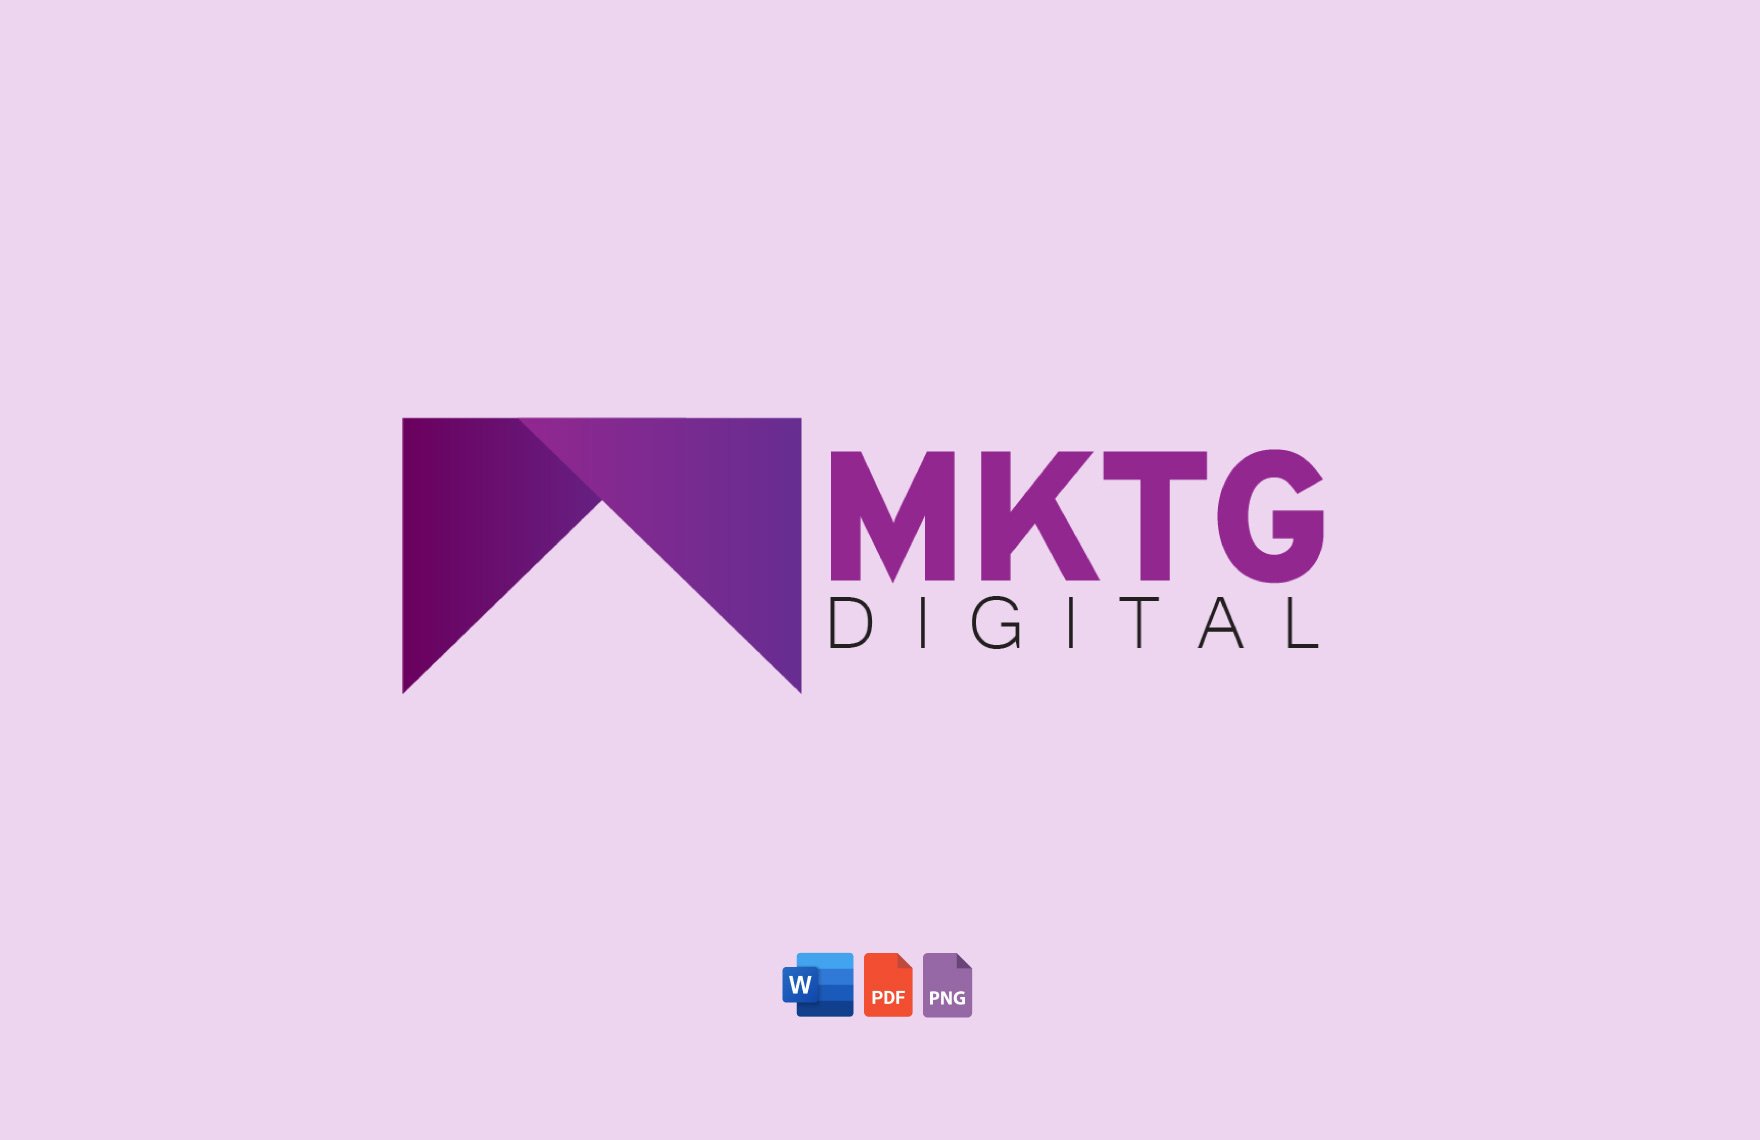 Digital Marketing Agency Logo Design Template